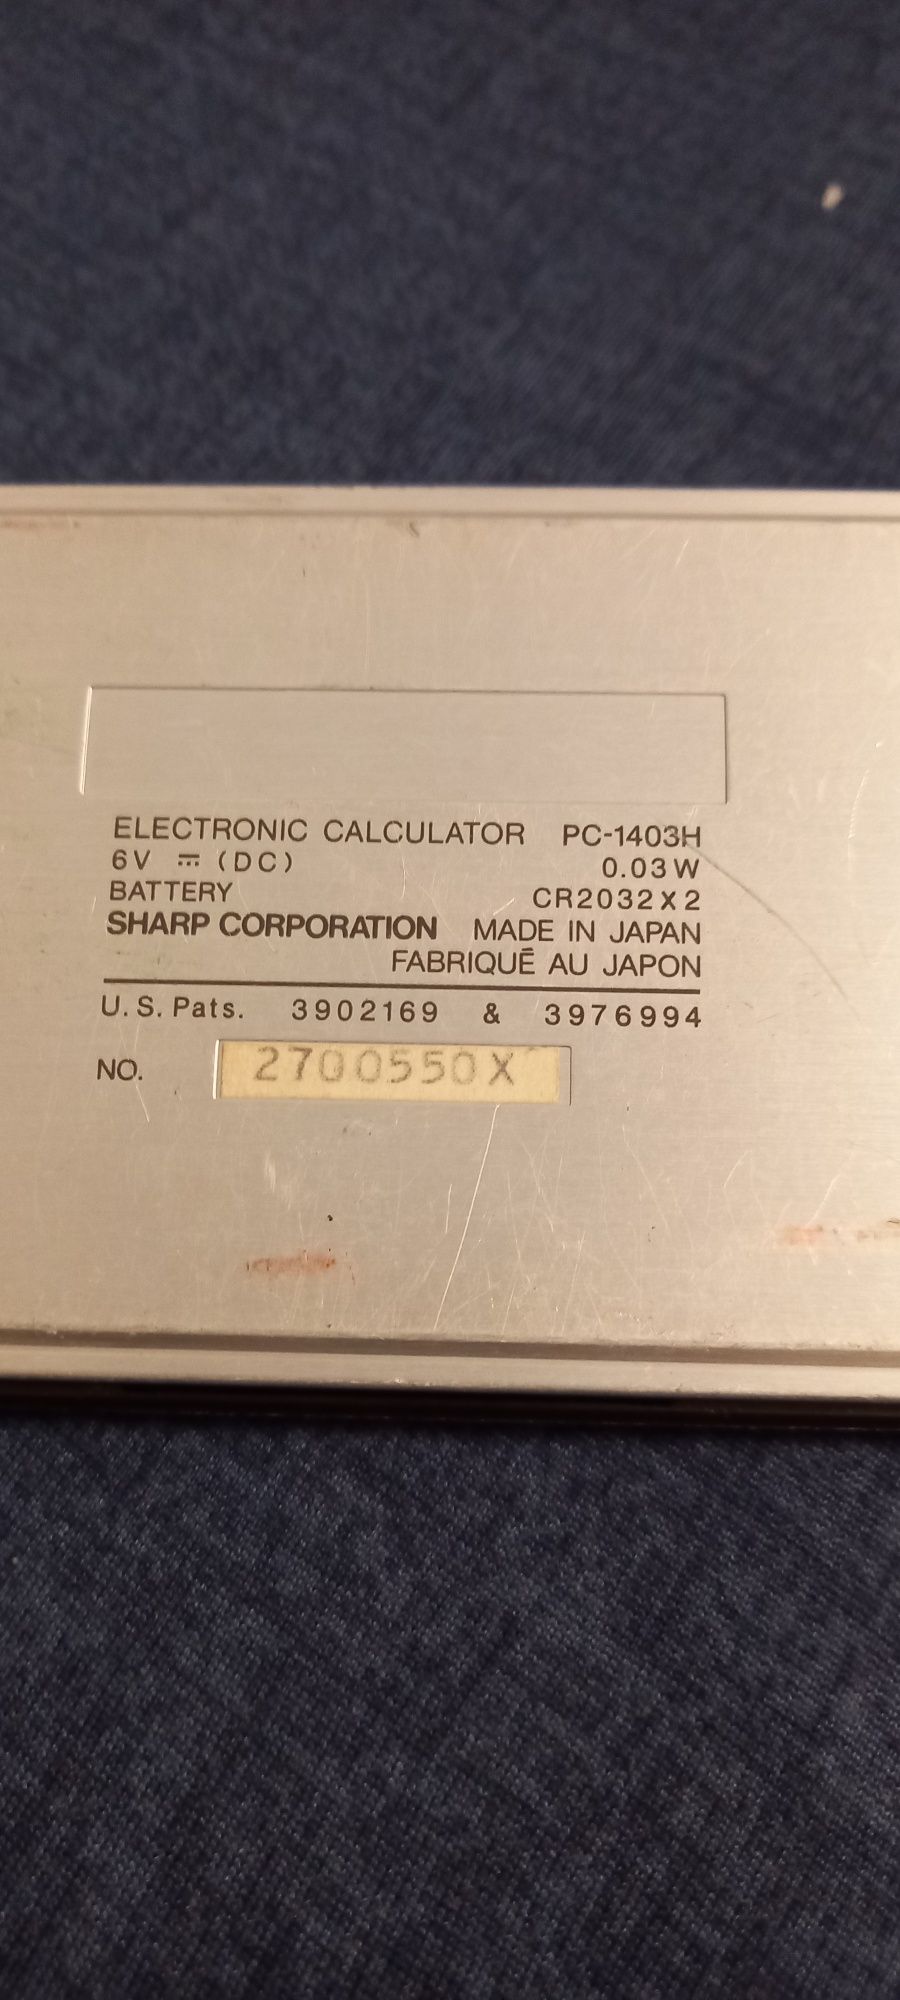 PC-1403H Sharp Pocket Computer/Calculator/PC Vintage